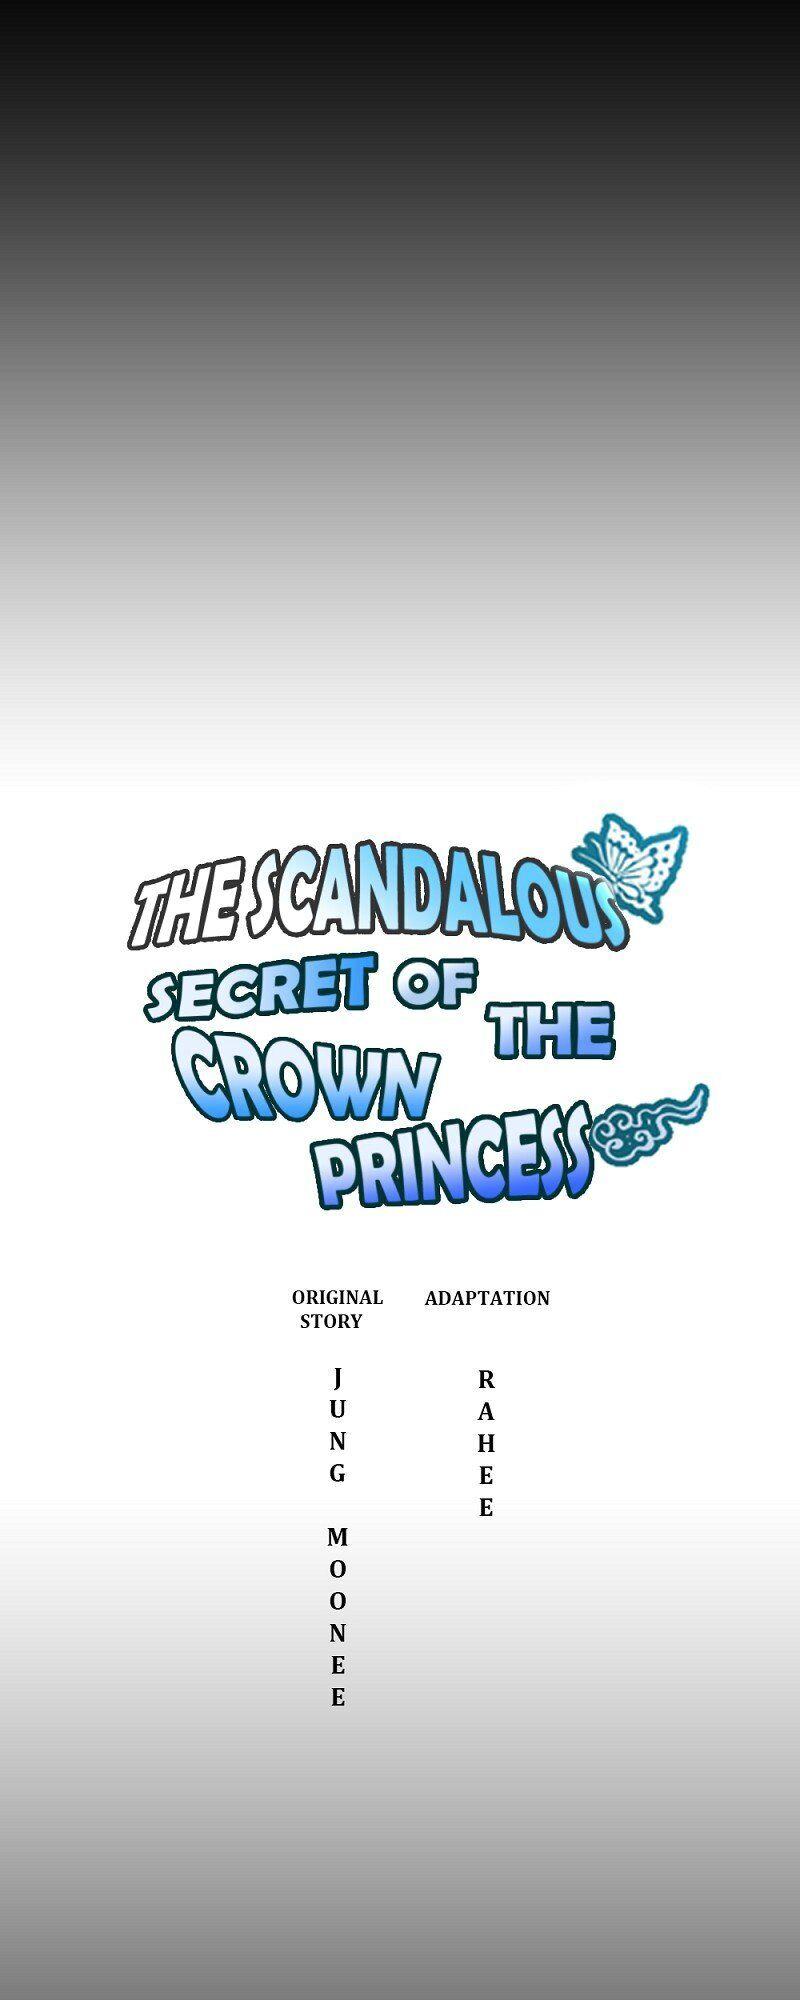 The Scandalous Secret of the Crown Princess chapter 23